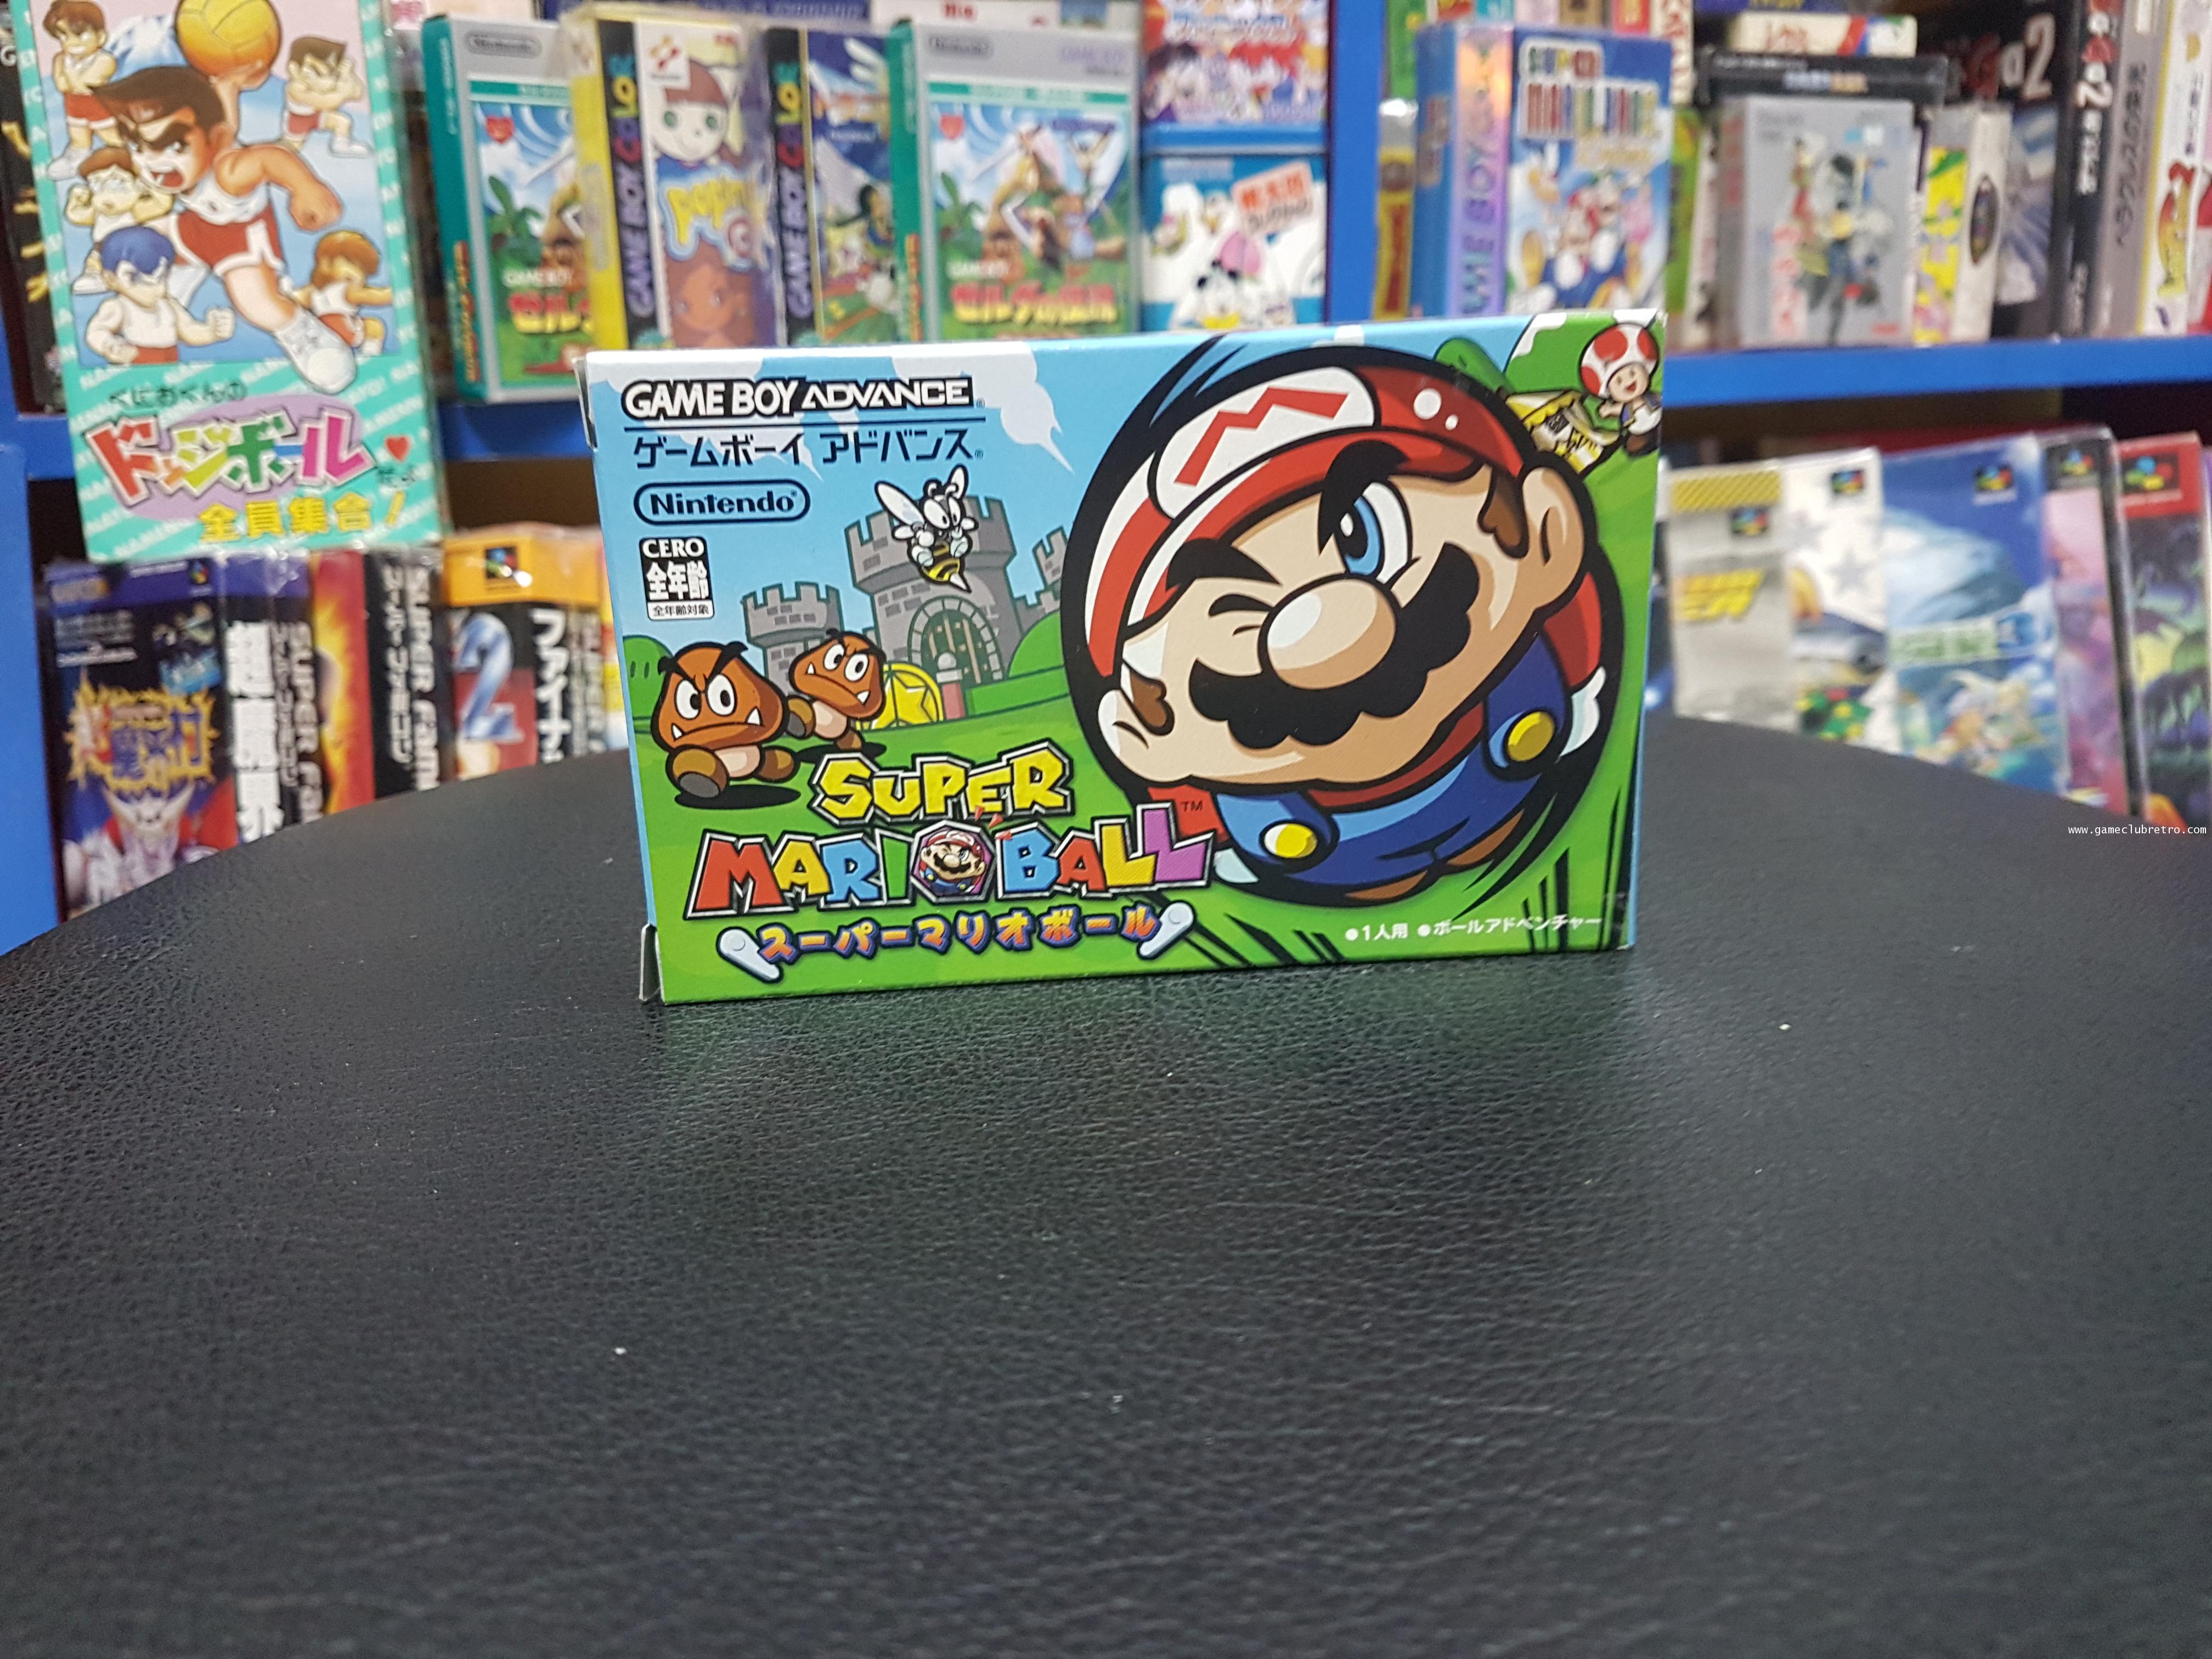 Super Mario Ball Brand New  ซุปเปอร์ มาริโอ้ บอล มือ 1